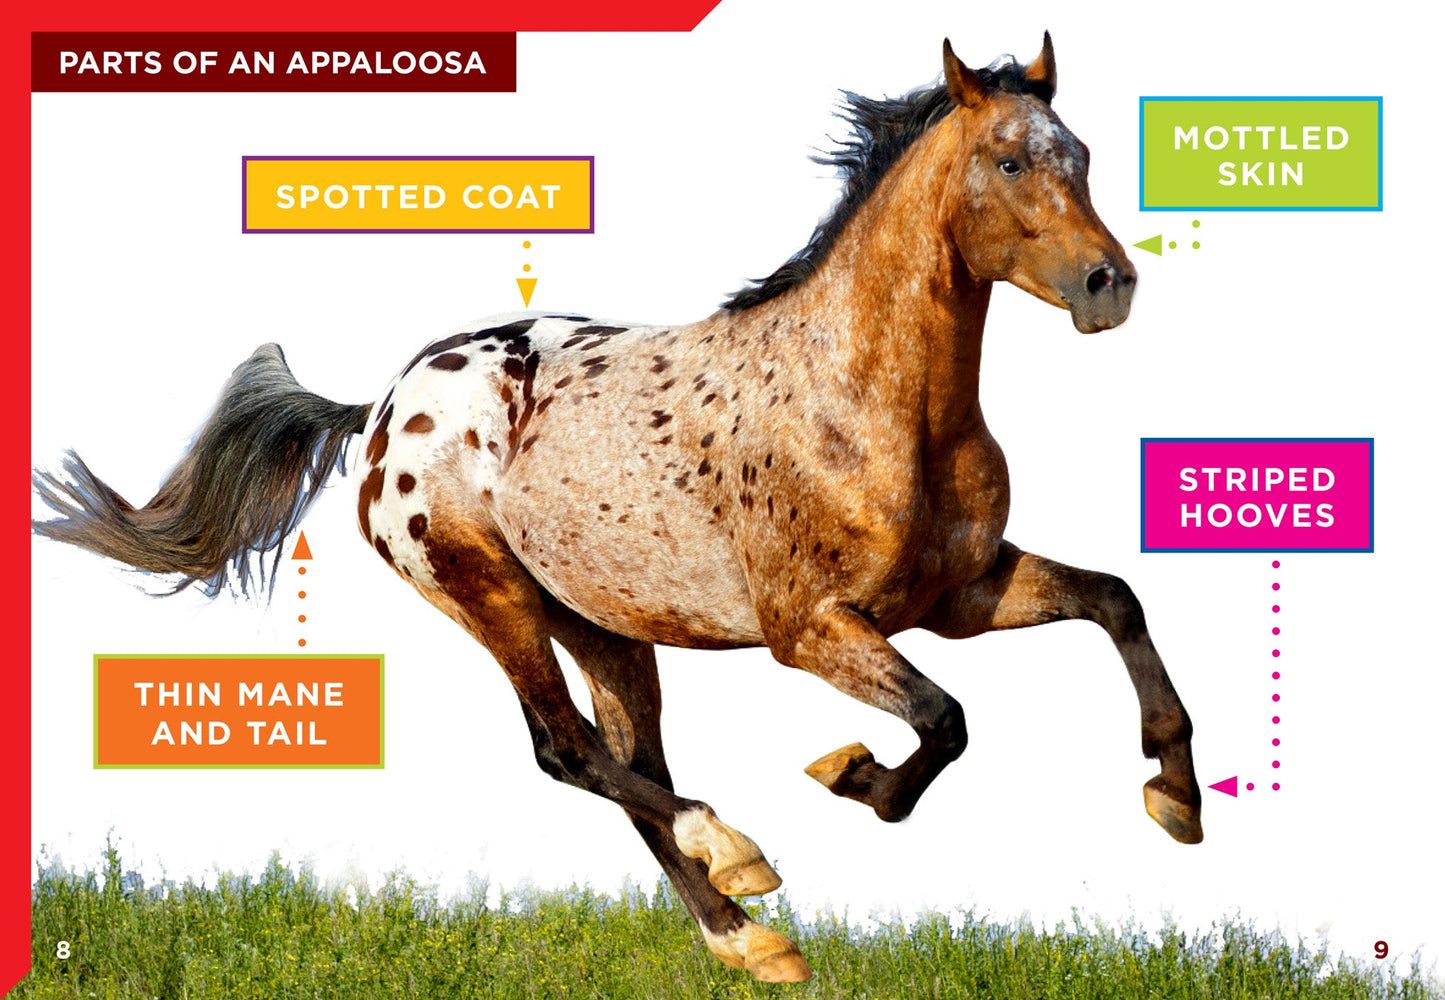 Horse Crazy: Appaloosa Horses